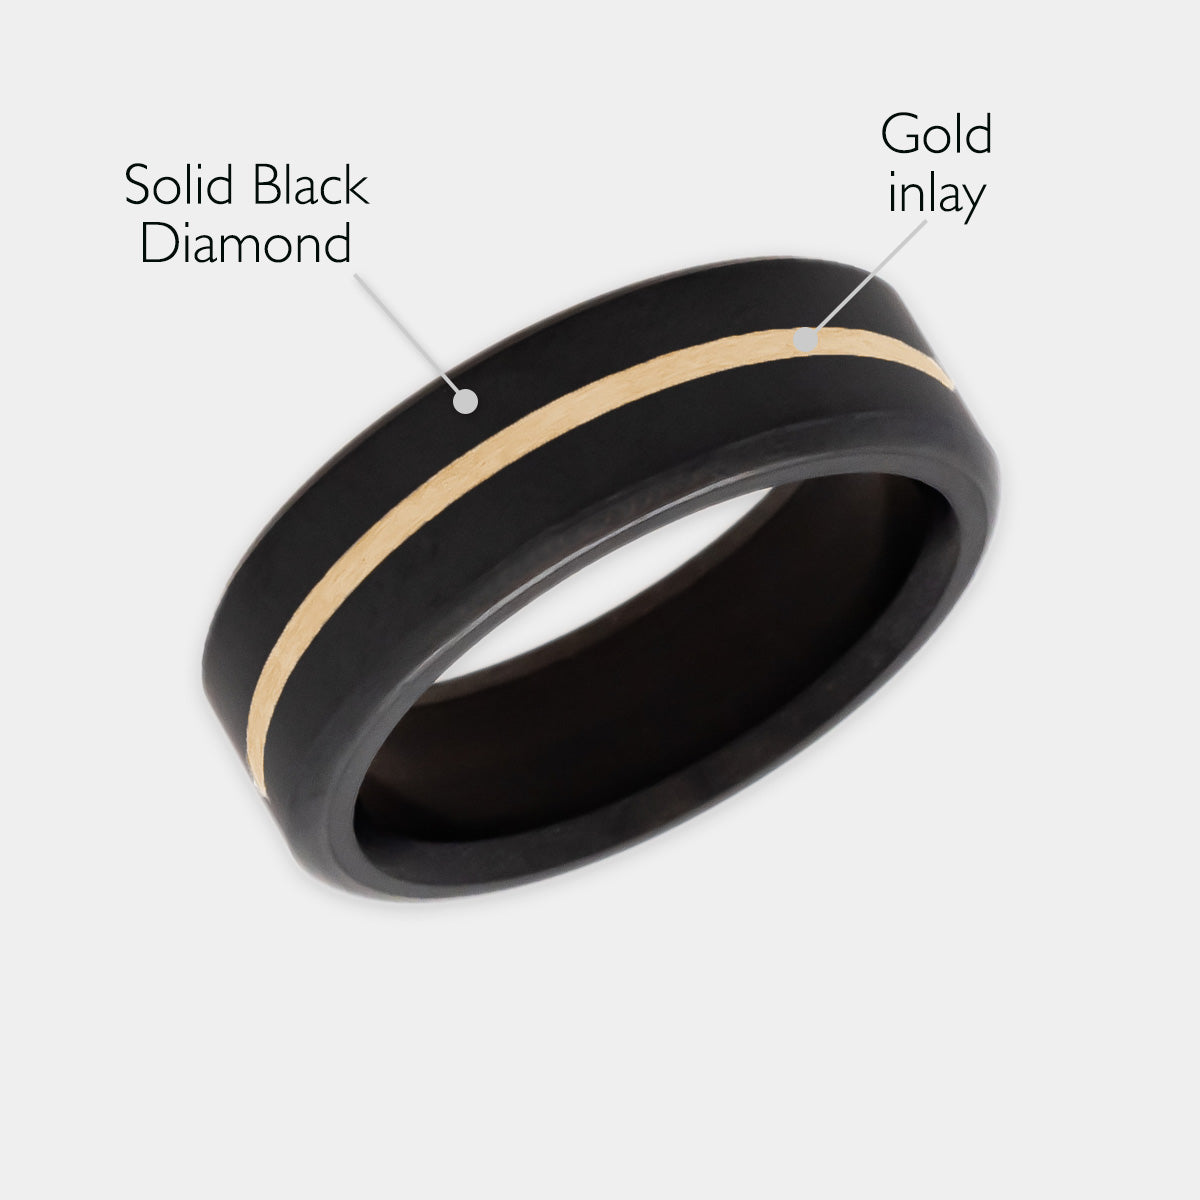 Black Diamond - Men’s Ring 7mm - 24k Yellow Gold Inlay - KRATOS - Elysium Black Diamond